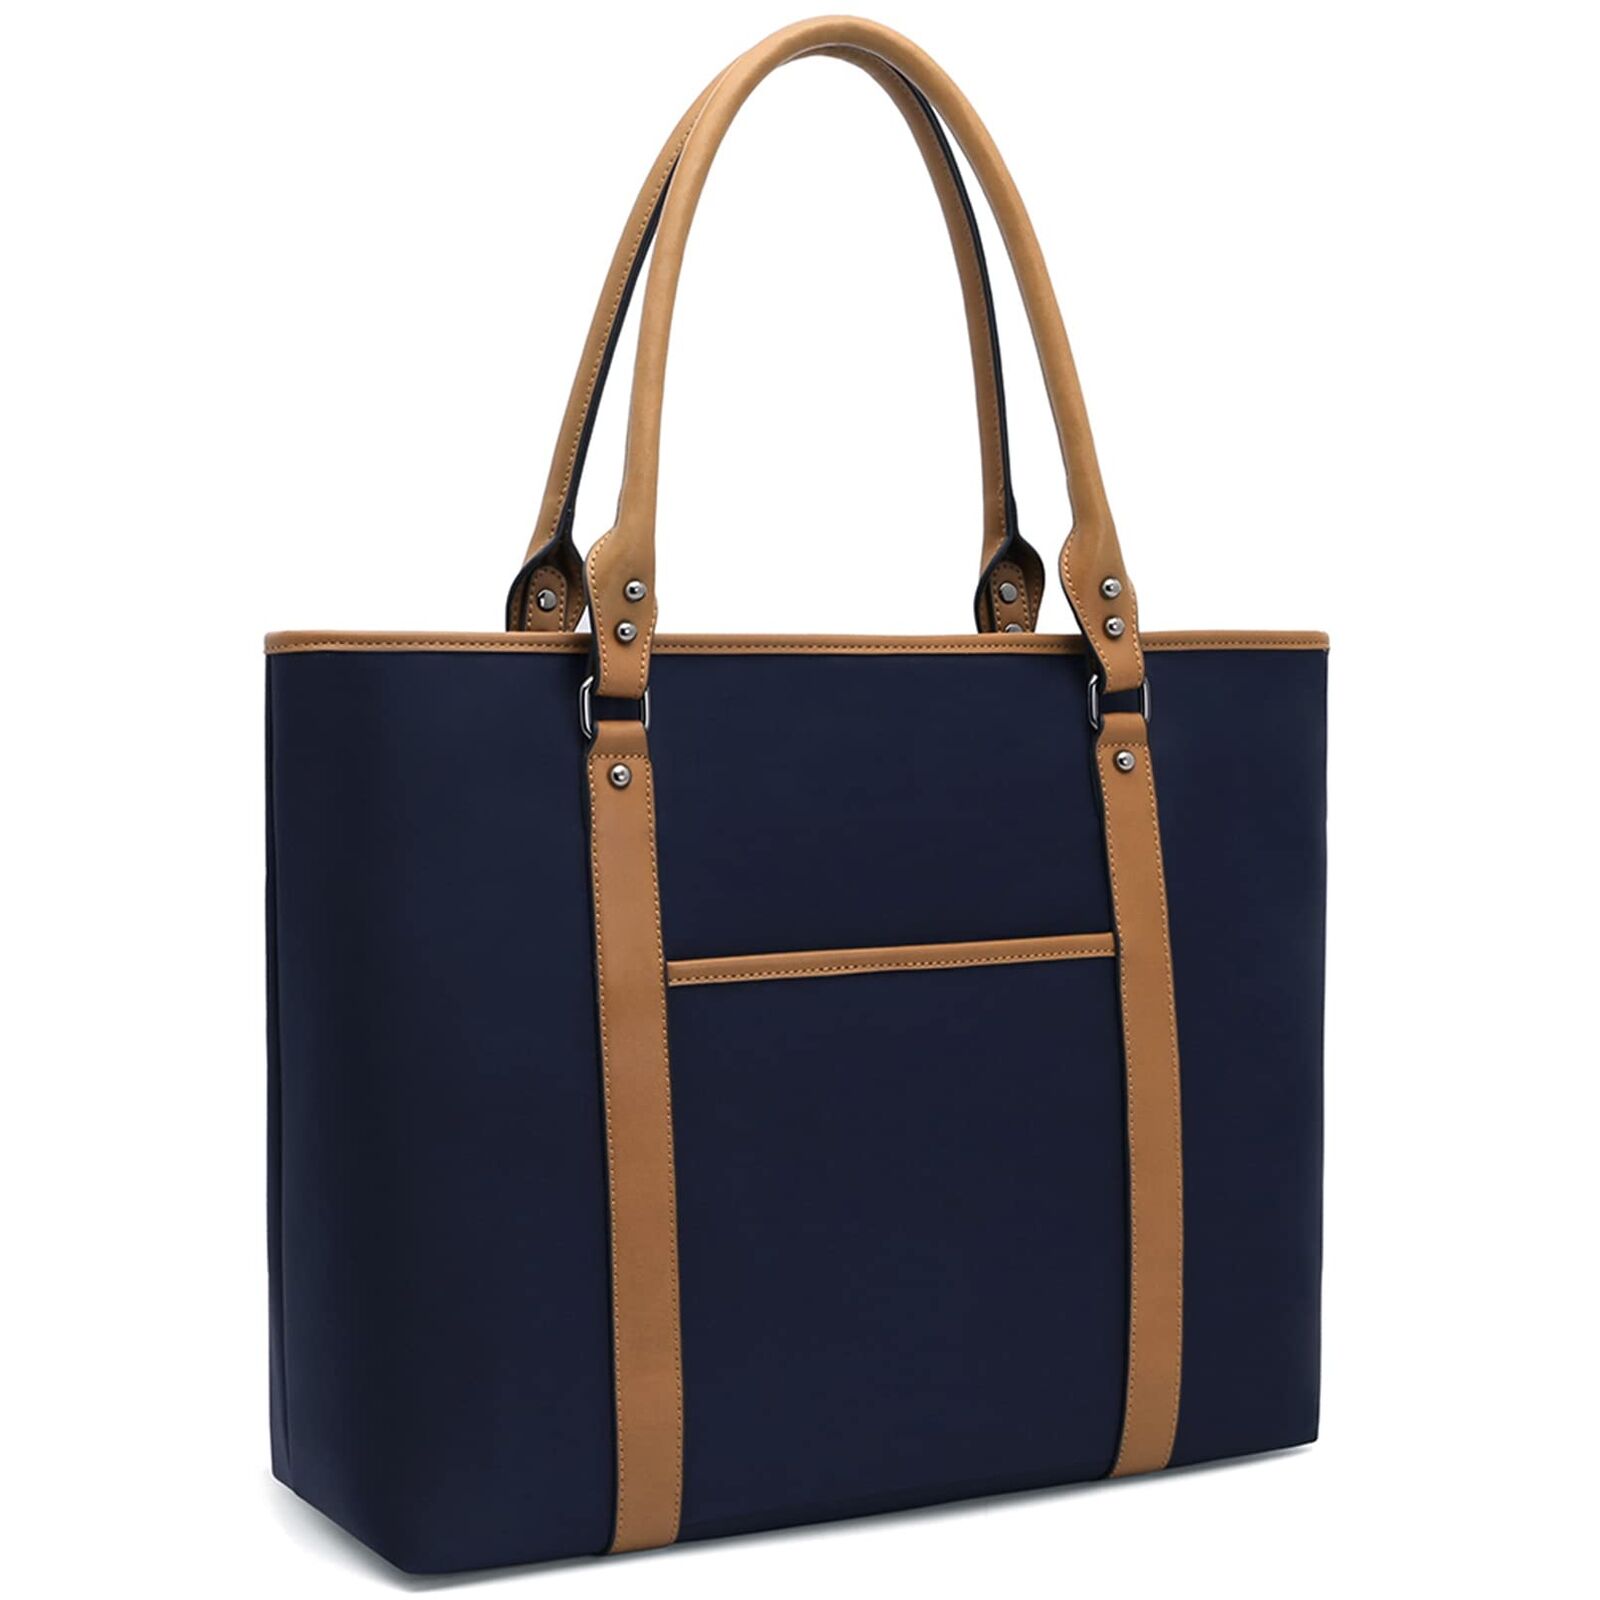 15.6 inch Laptop Bag for Women,Multi Pockets Large Work Bag,Lightweight Water...